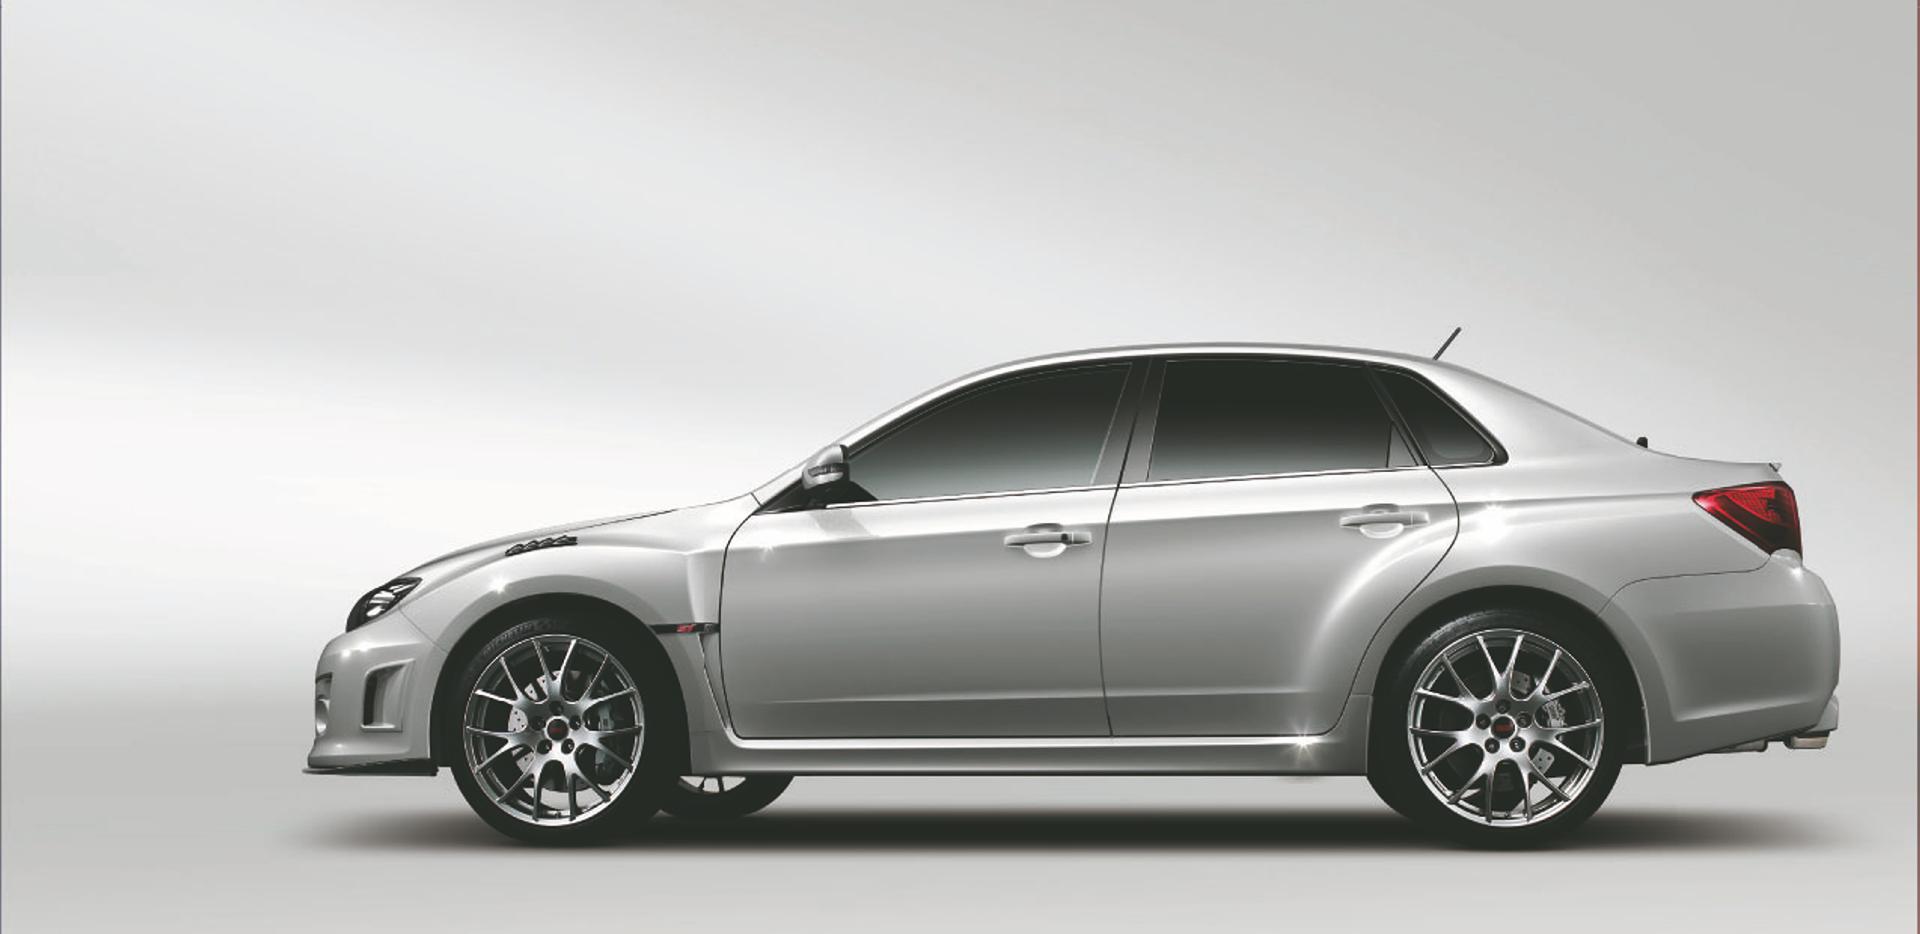 2012 Subaru Impreza WRX STI S206 NBR Challenge Package